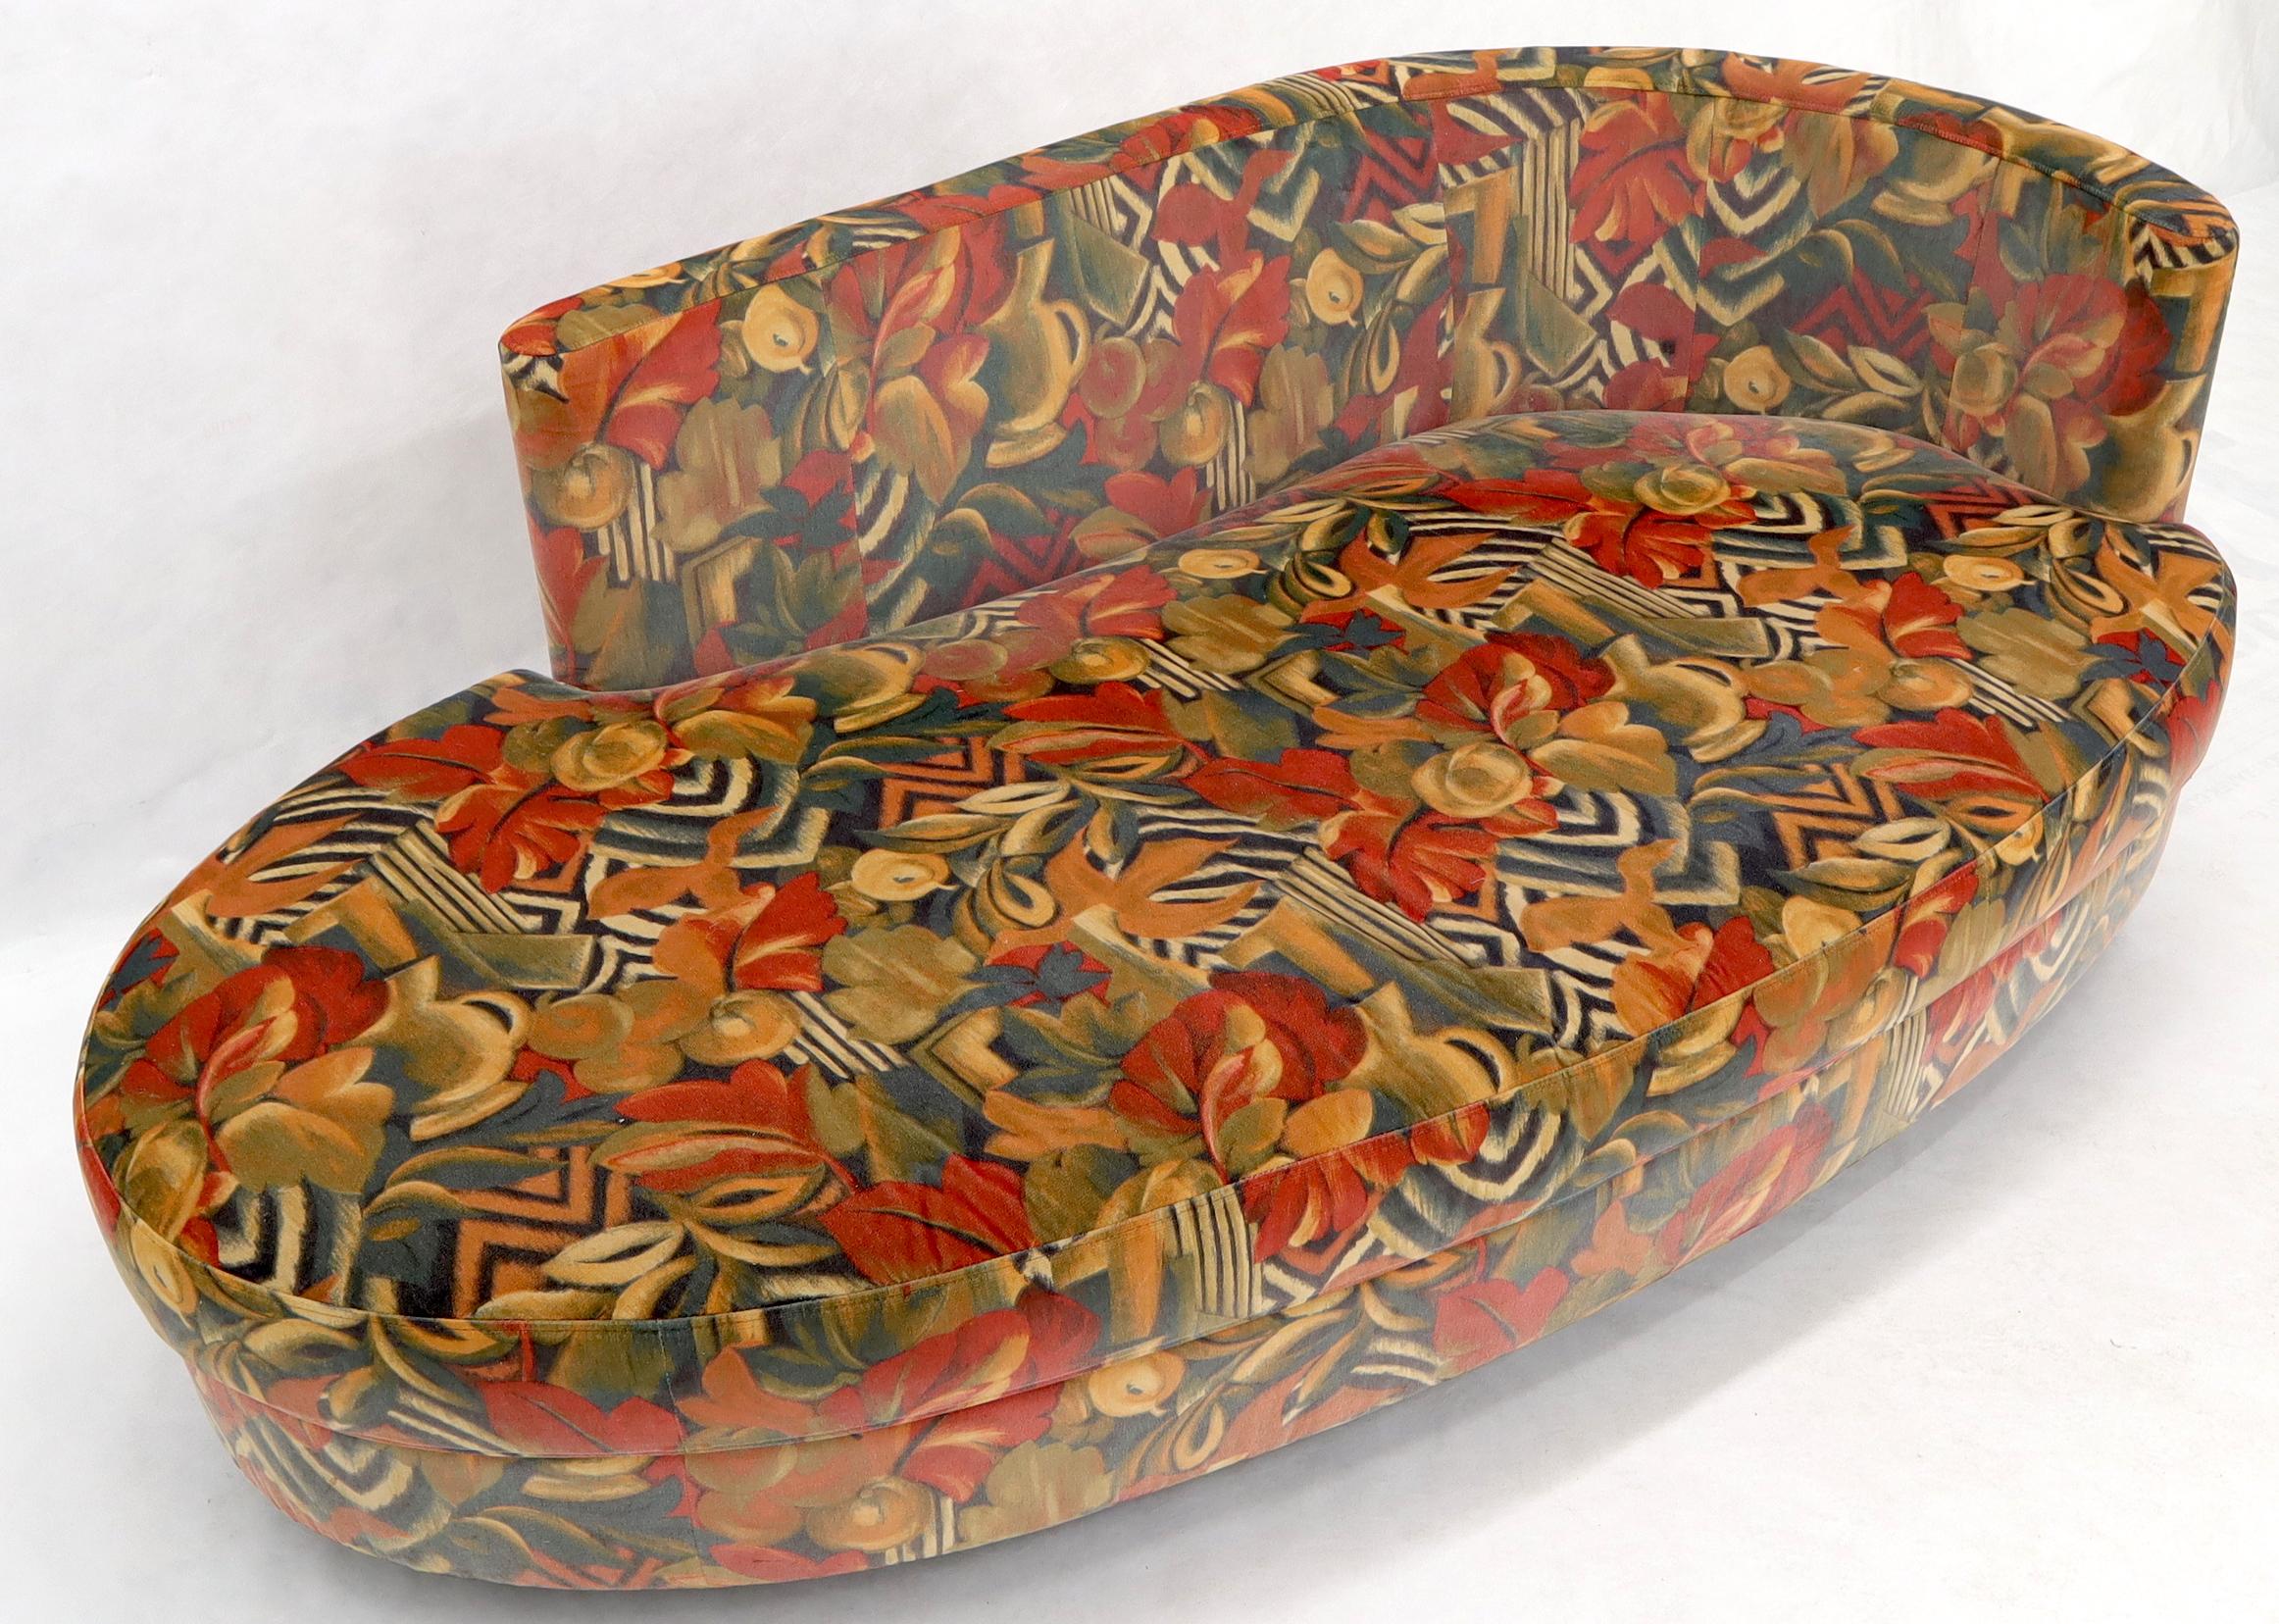 Oval Organic Shape Chaise Lounge Sofa Daybed (Moderne der Mitte des Jahrhunderts)